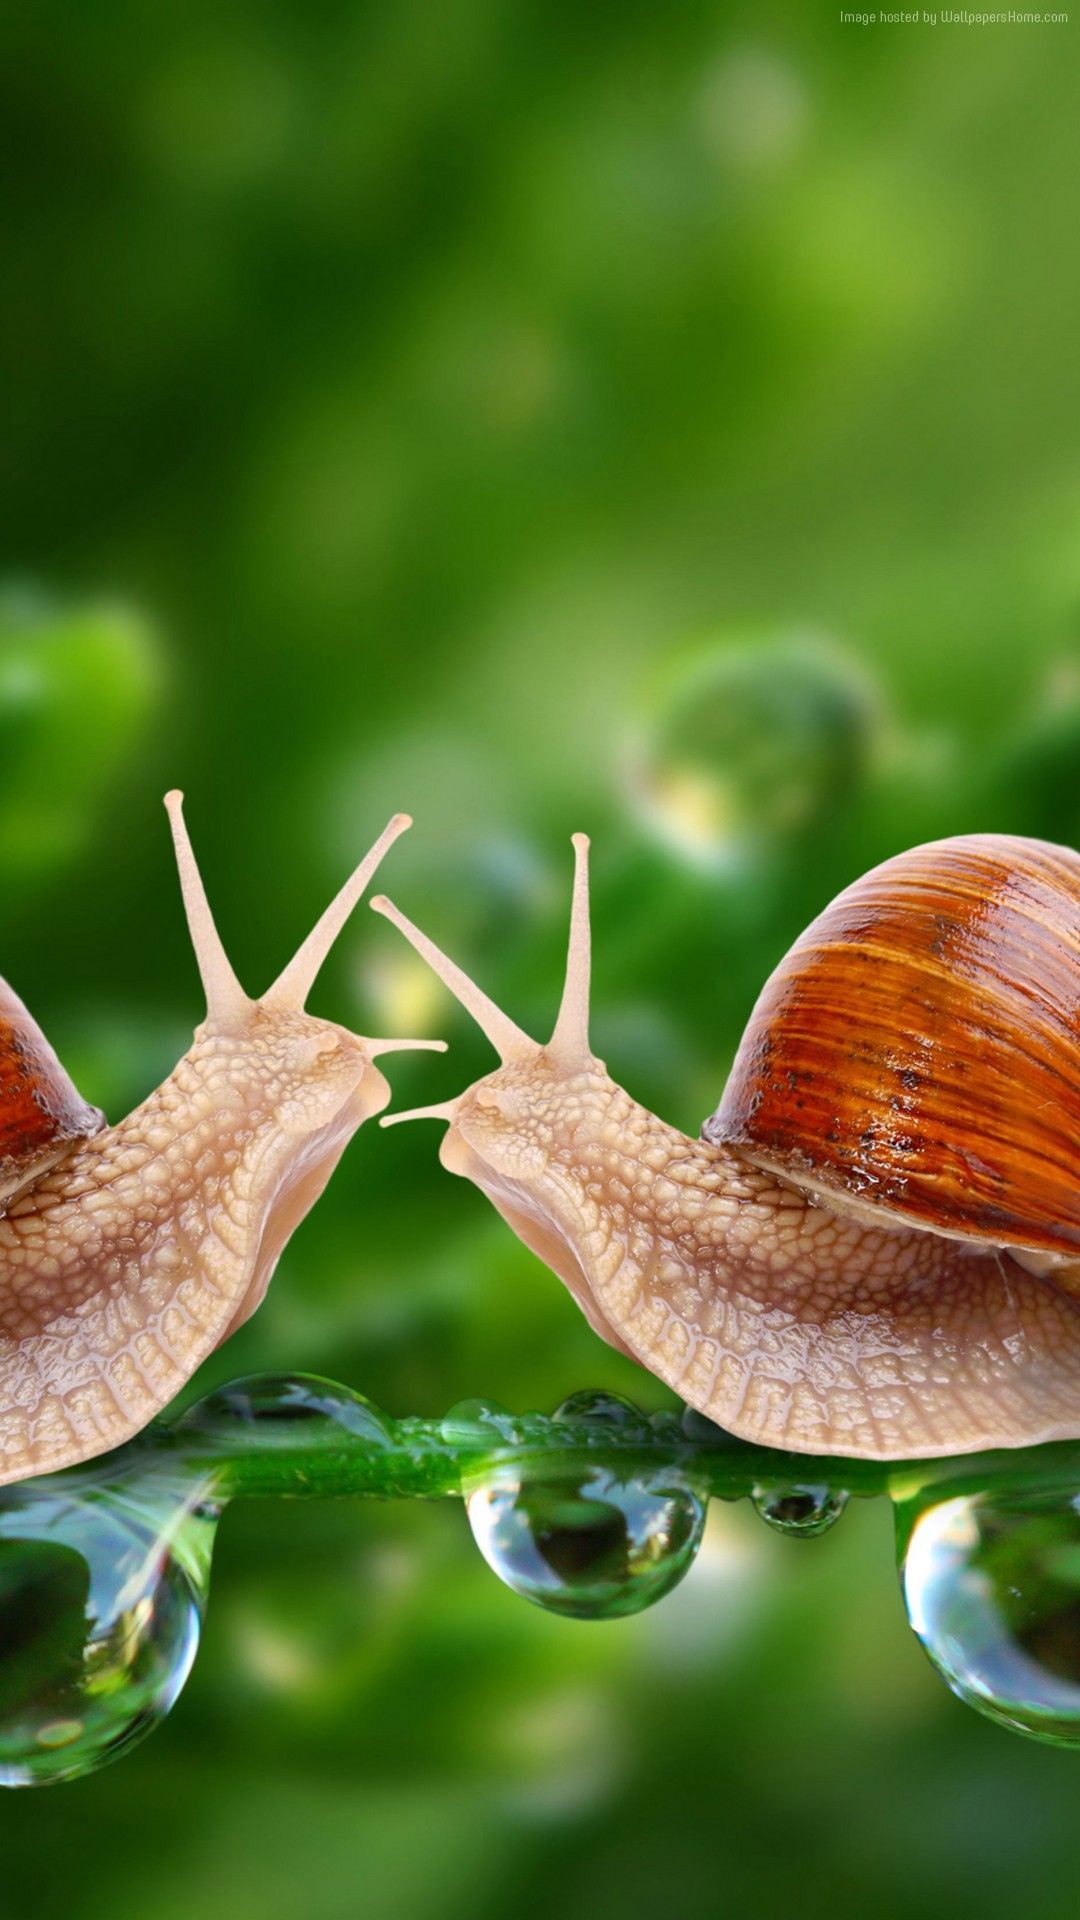 Snail Mobile HD Wallpaper. Nature wallpaper, Animal wallpaper, Snail